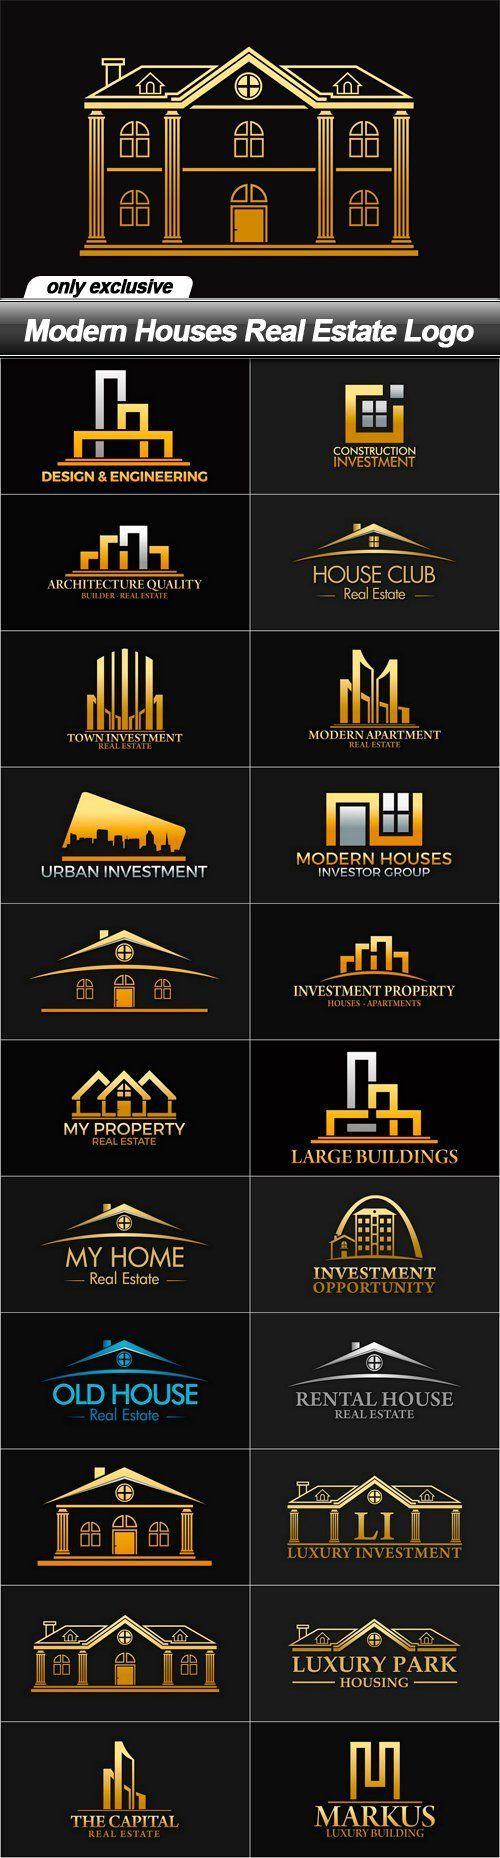 Modern House Logo - Modern Houses Real Estate Logo. Logos. Real estate